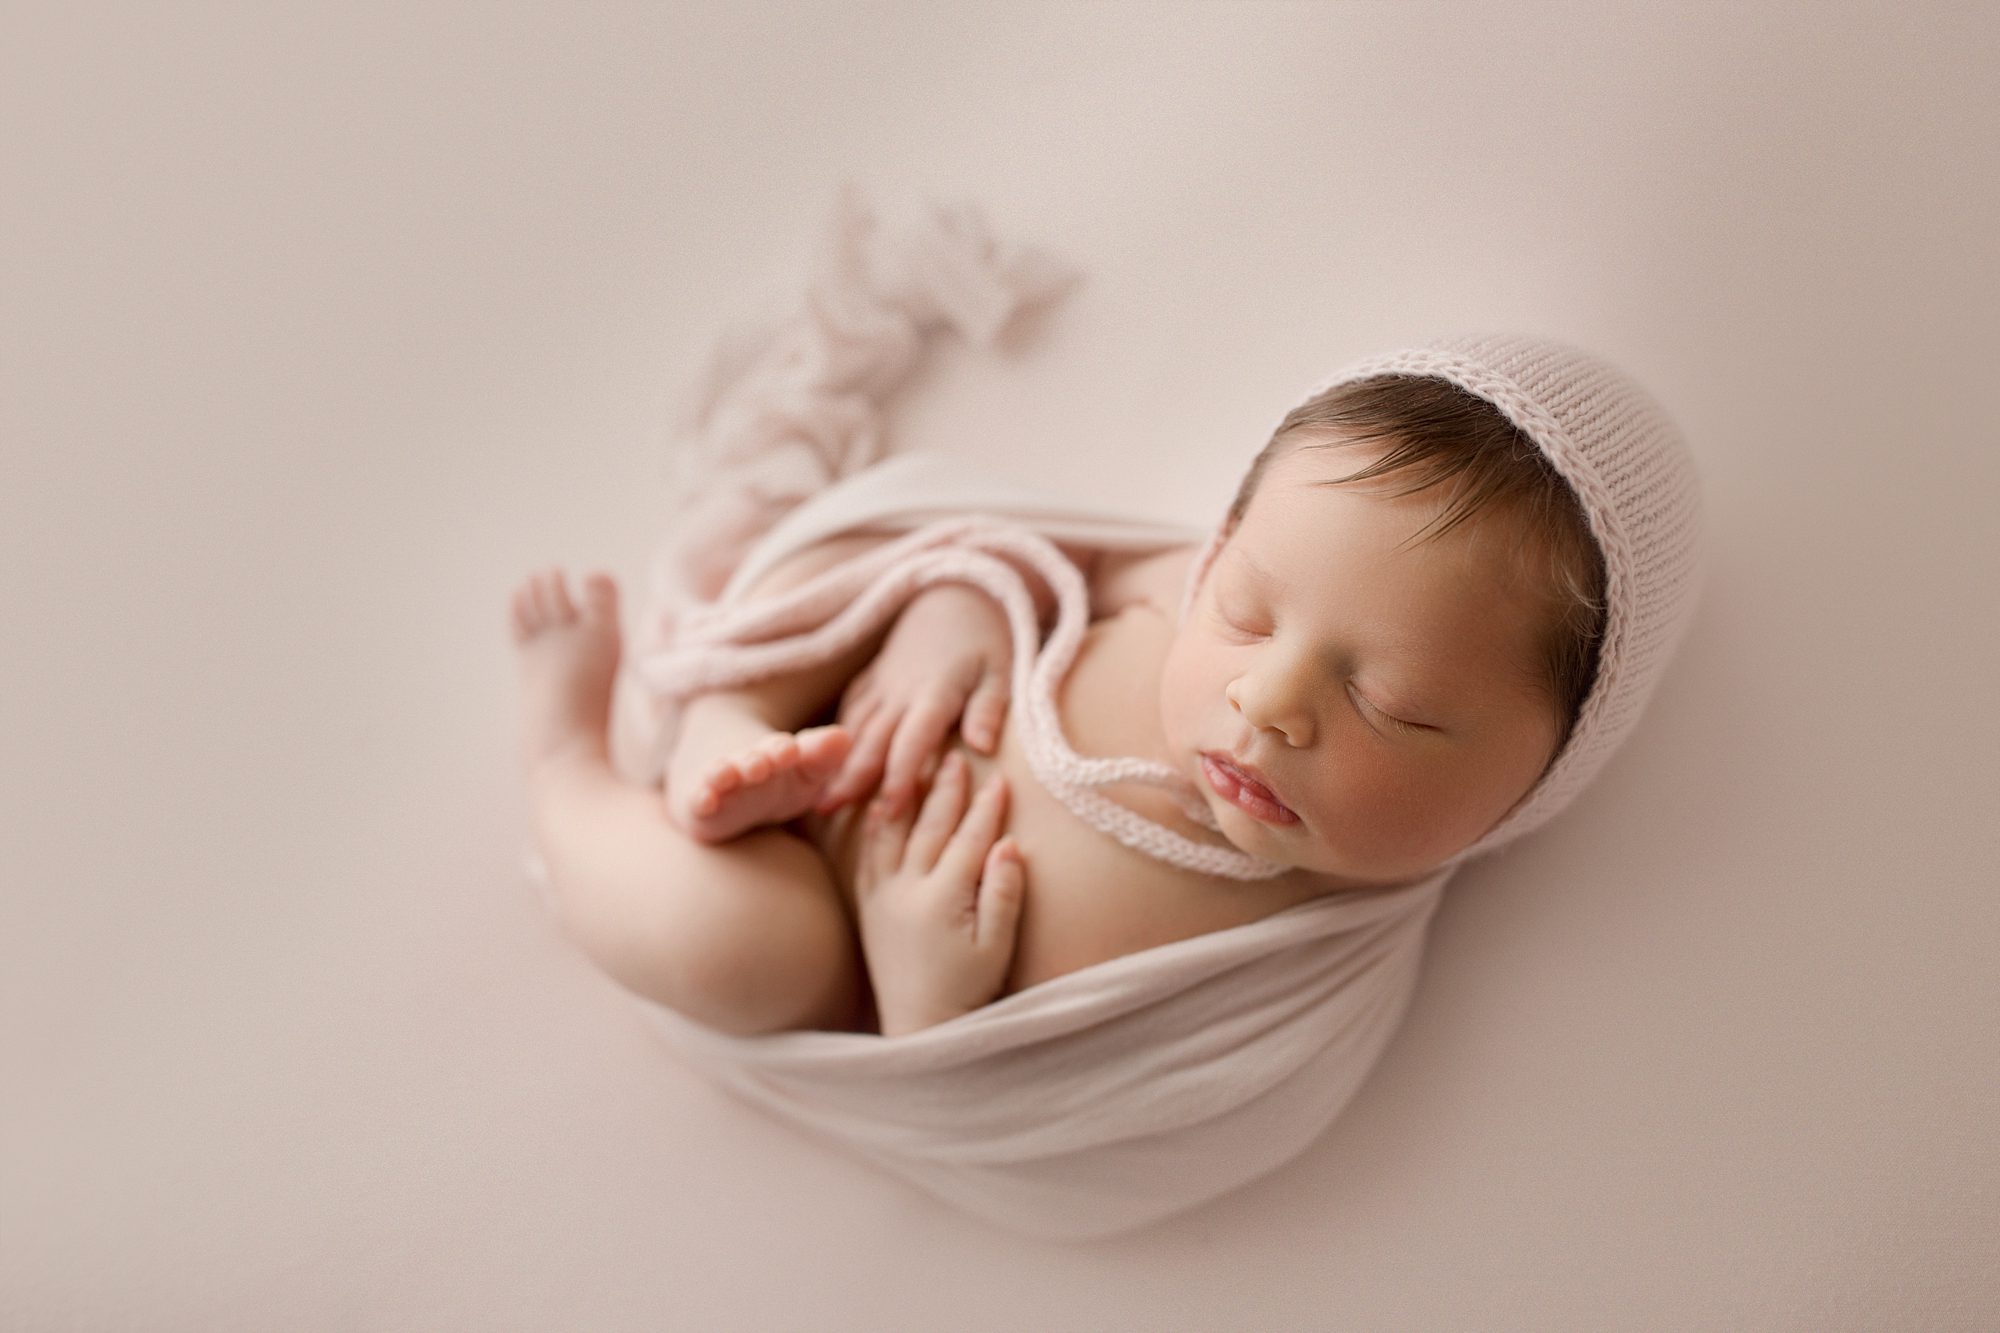 newborn photographer seattle | baby photography tacoma